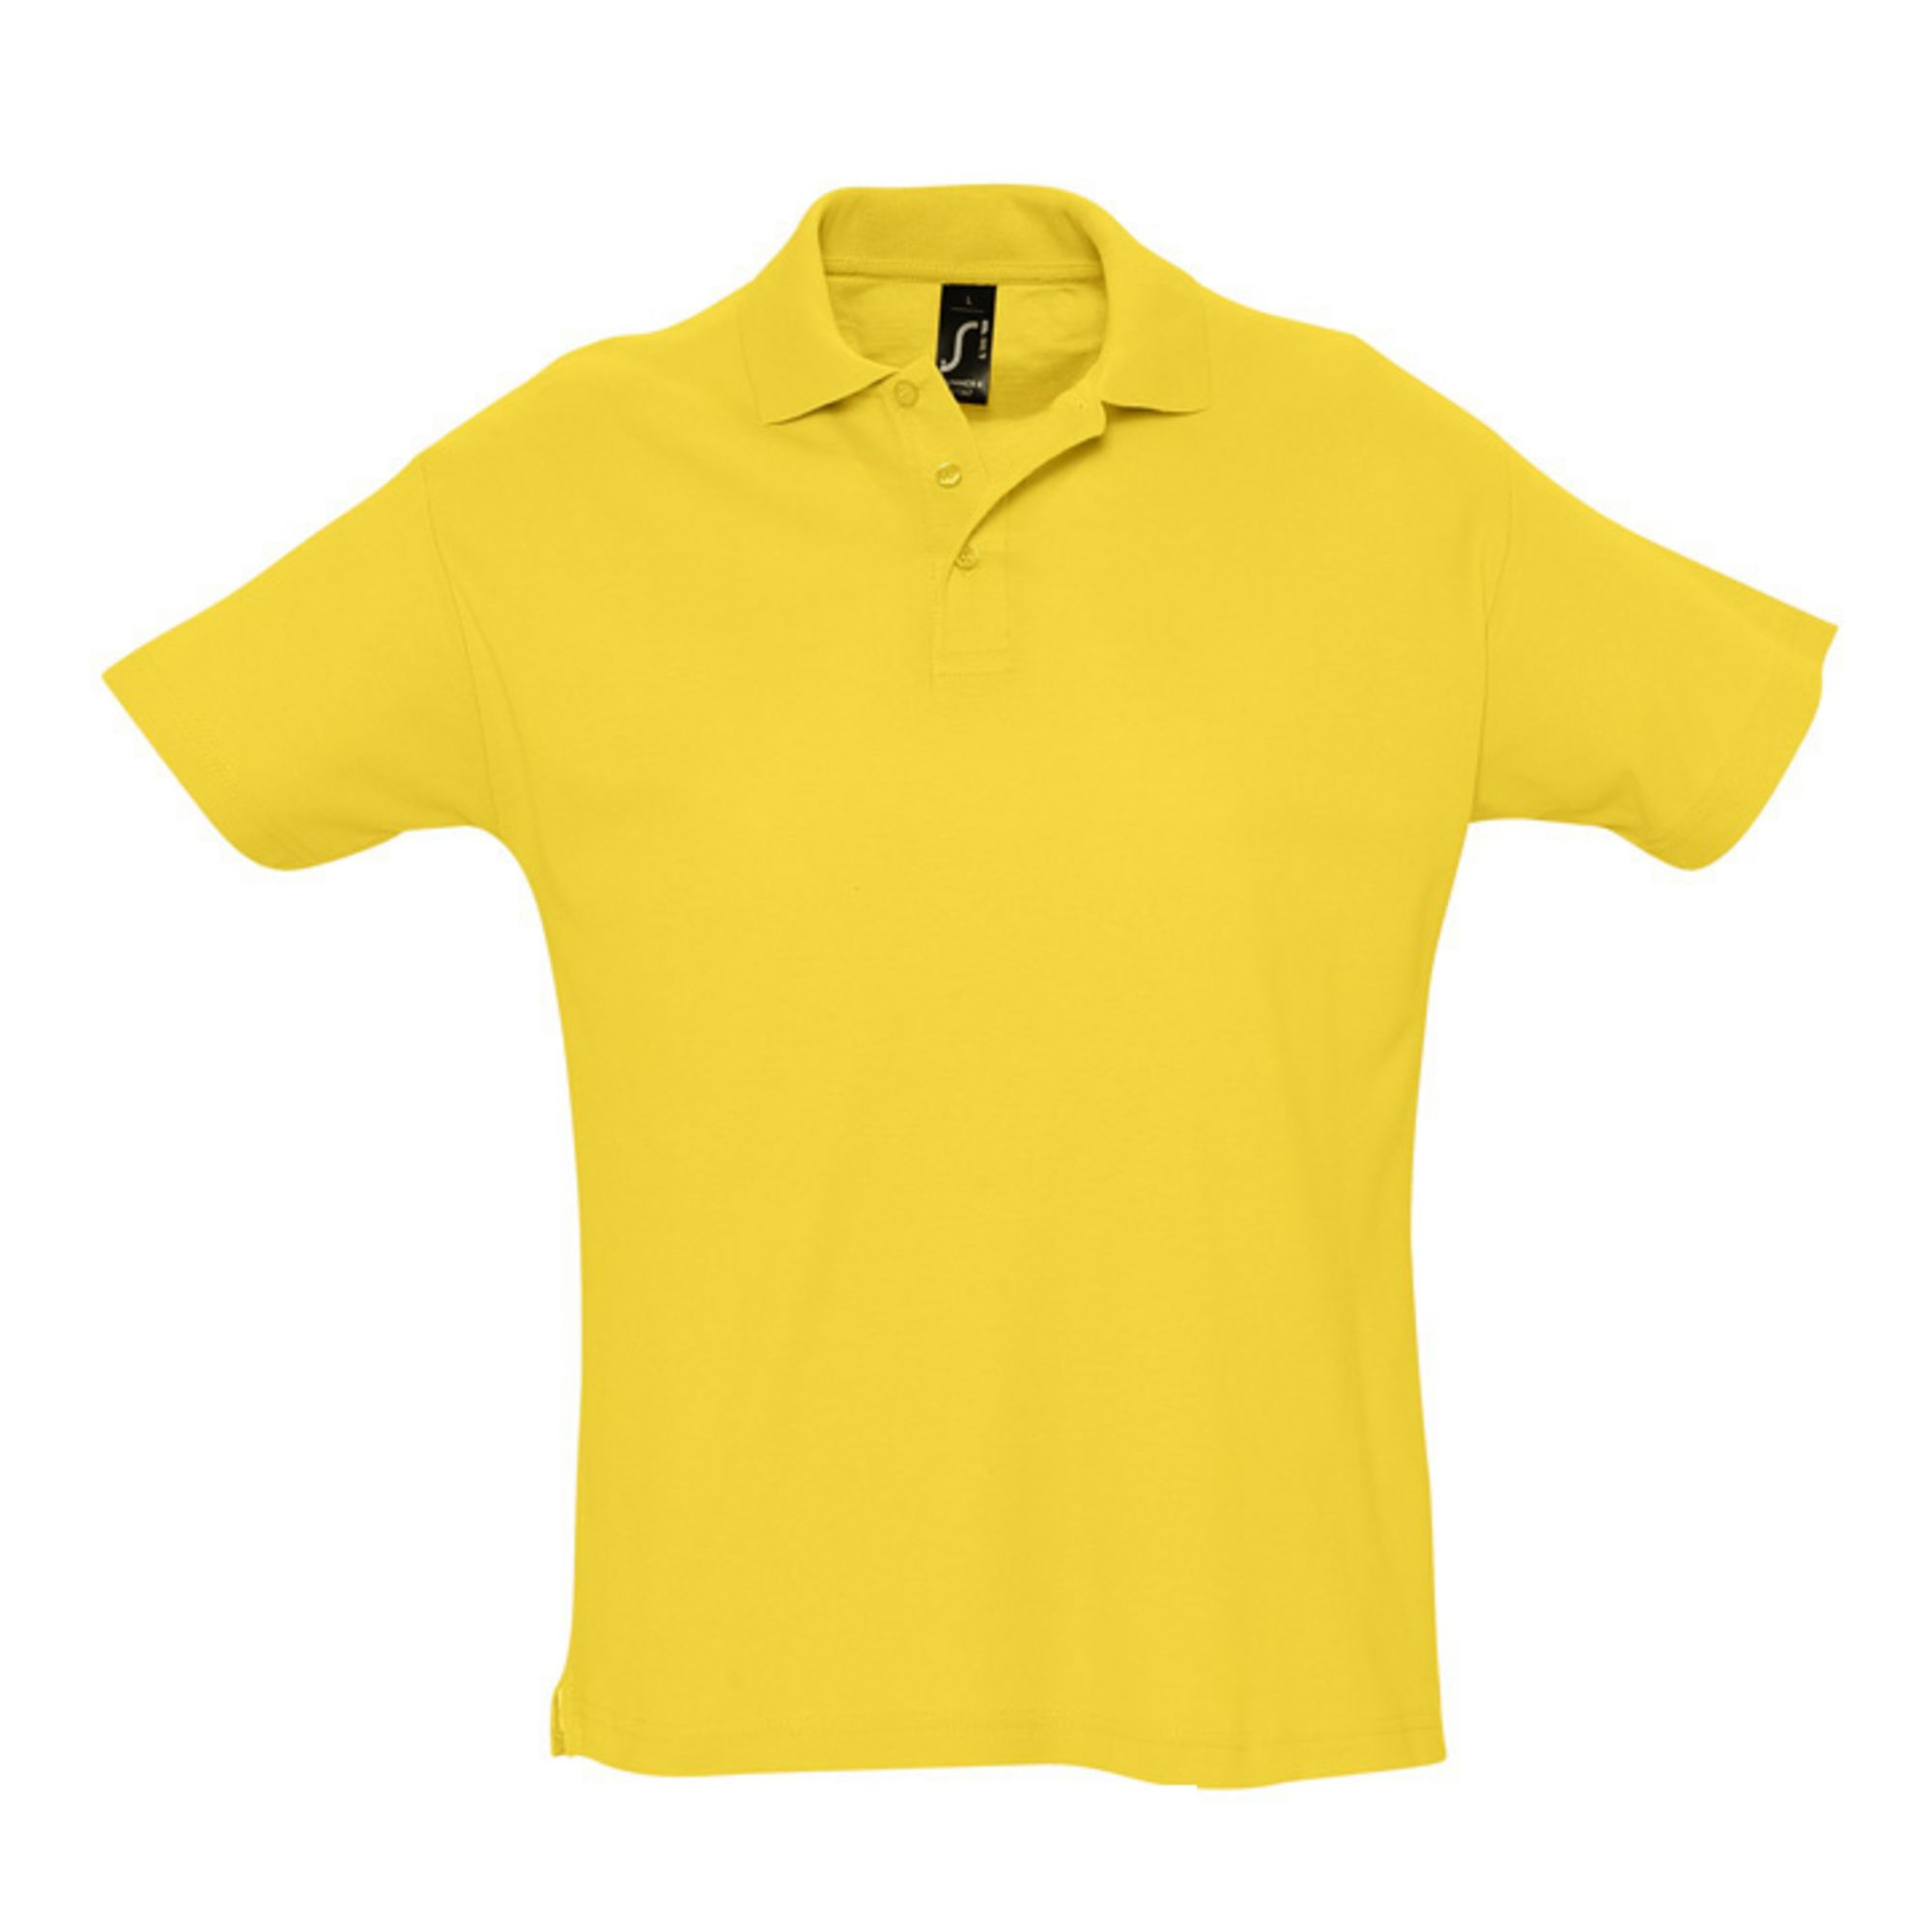 Рубашка-поло желтая "Summer", арт.1379 SALE фото 1